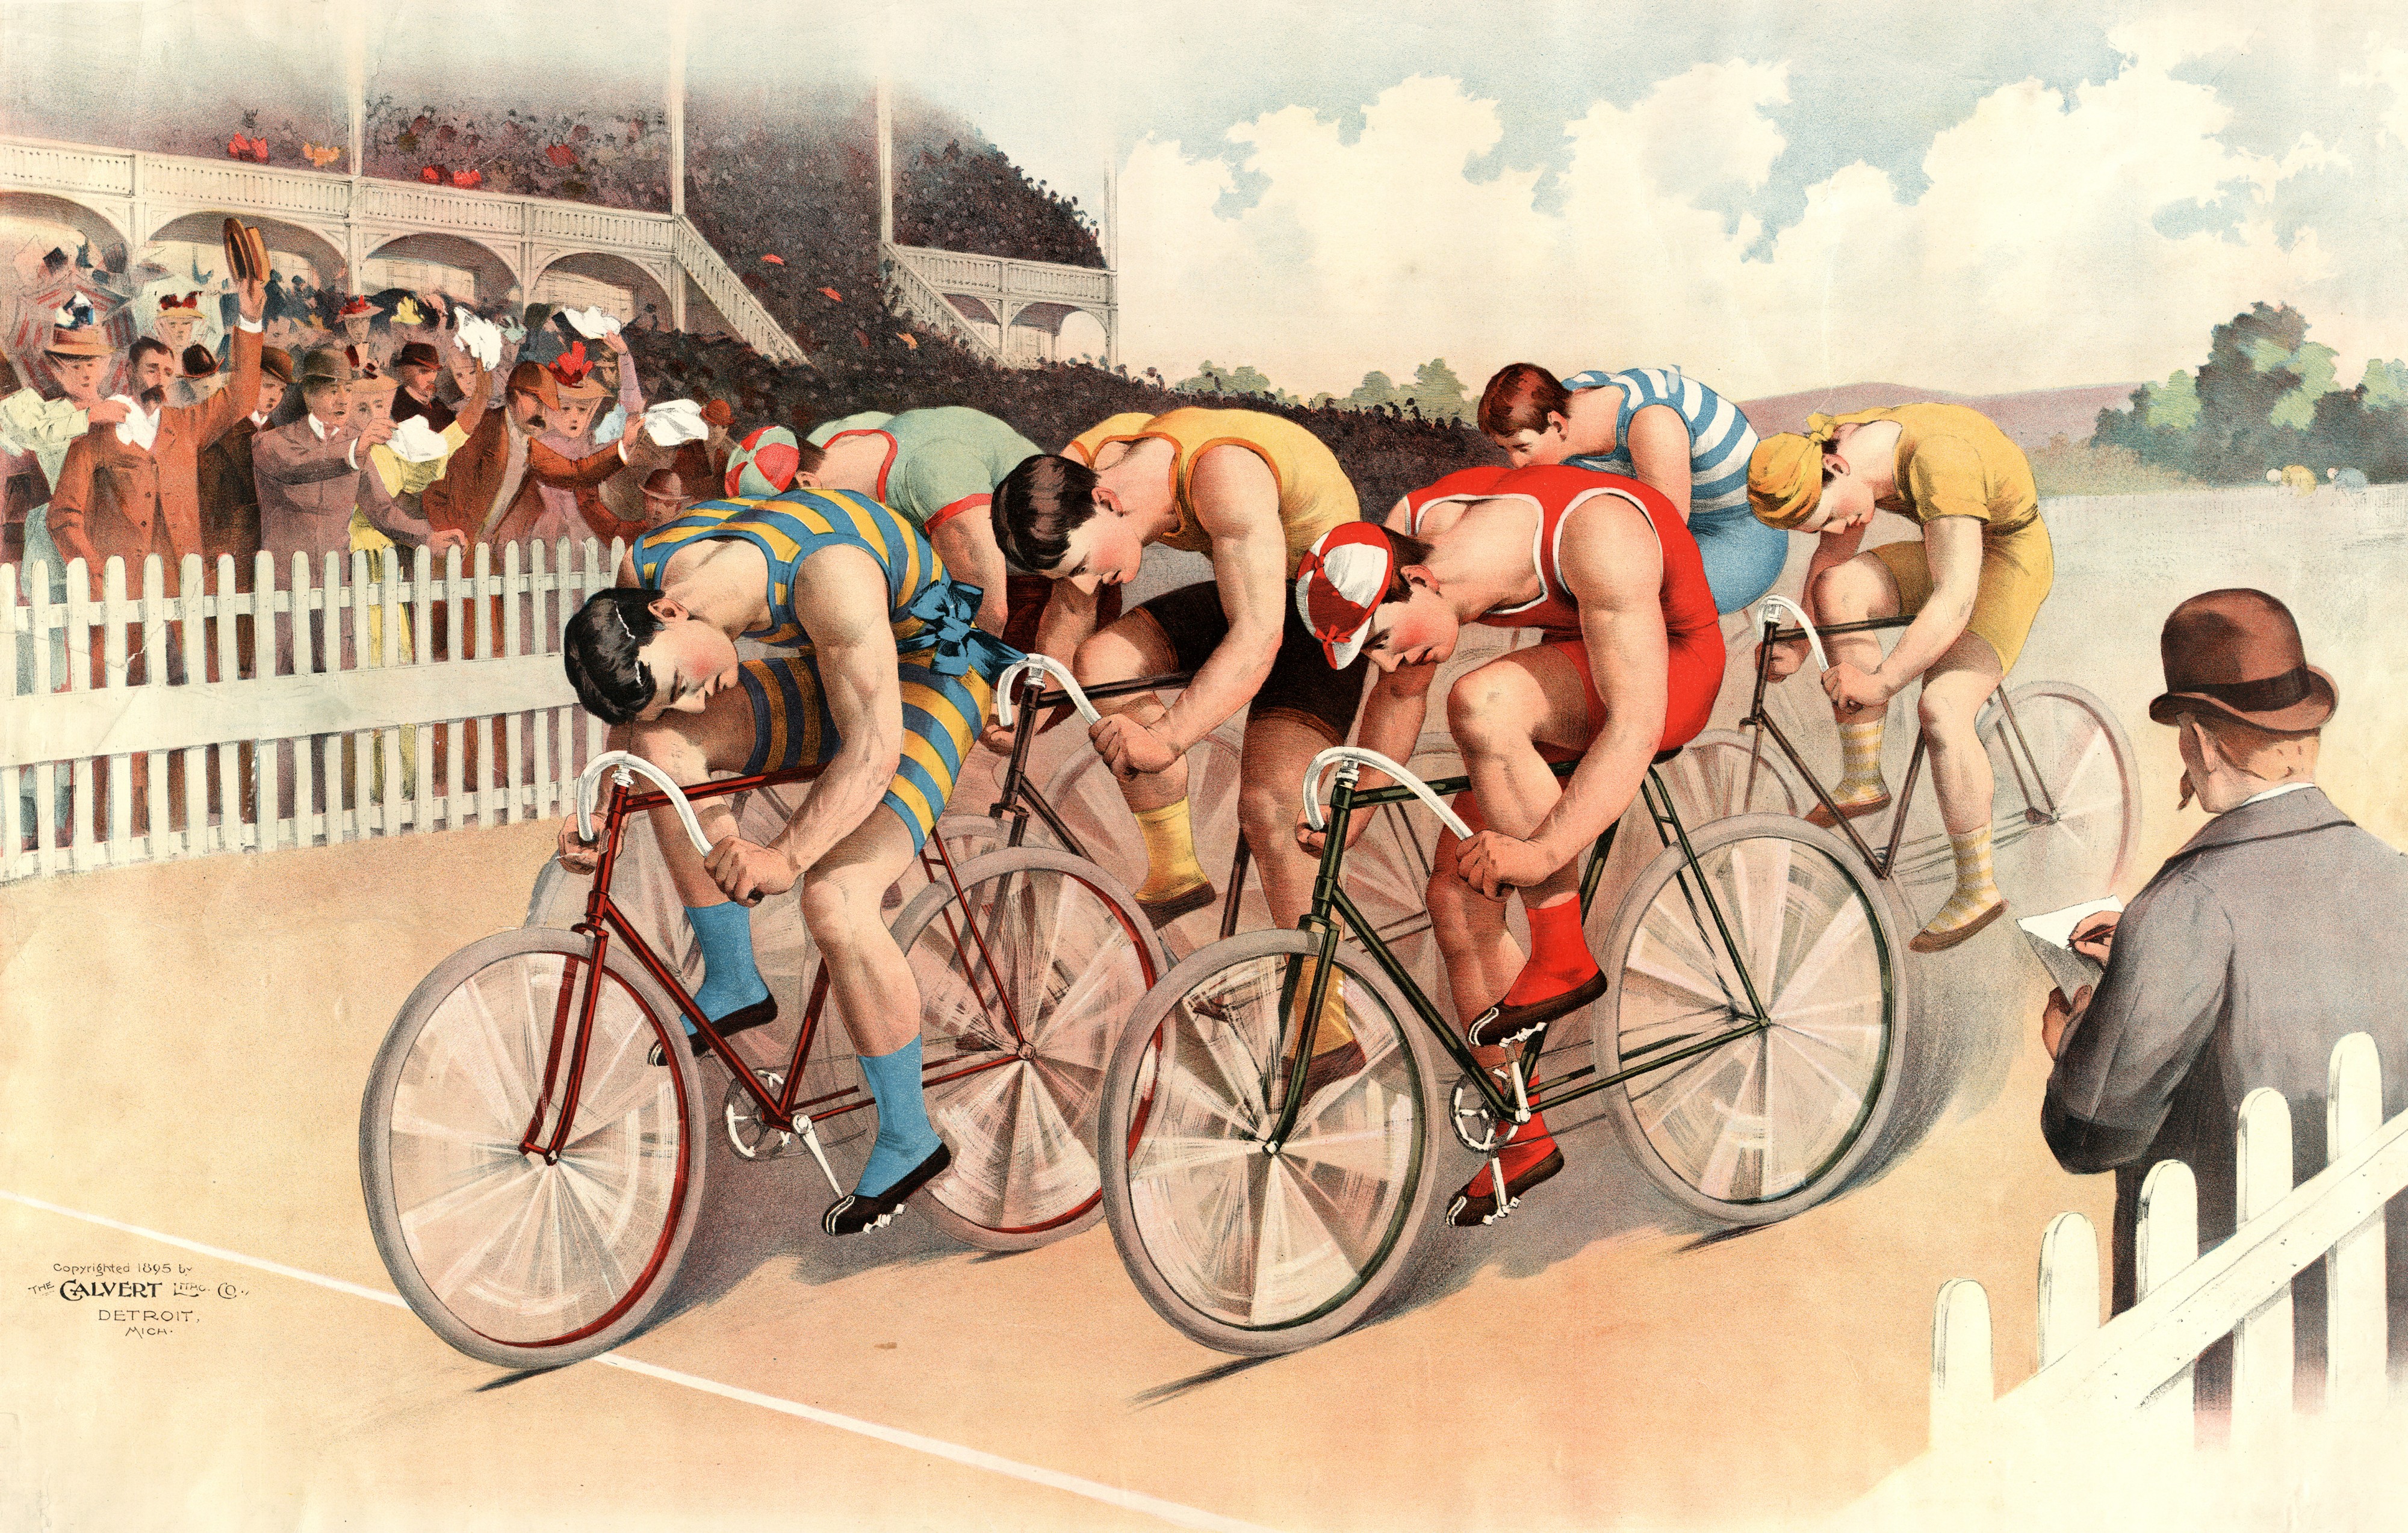 Bicycle race scene, 1895